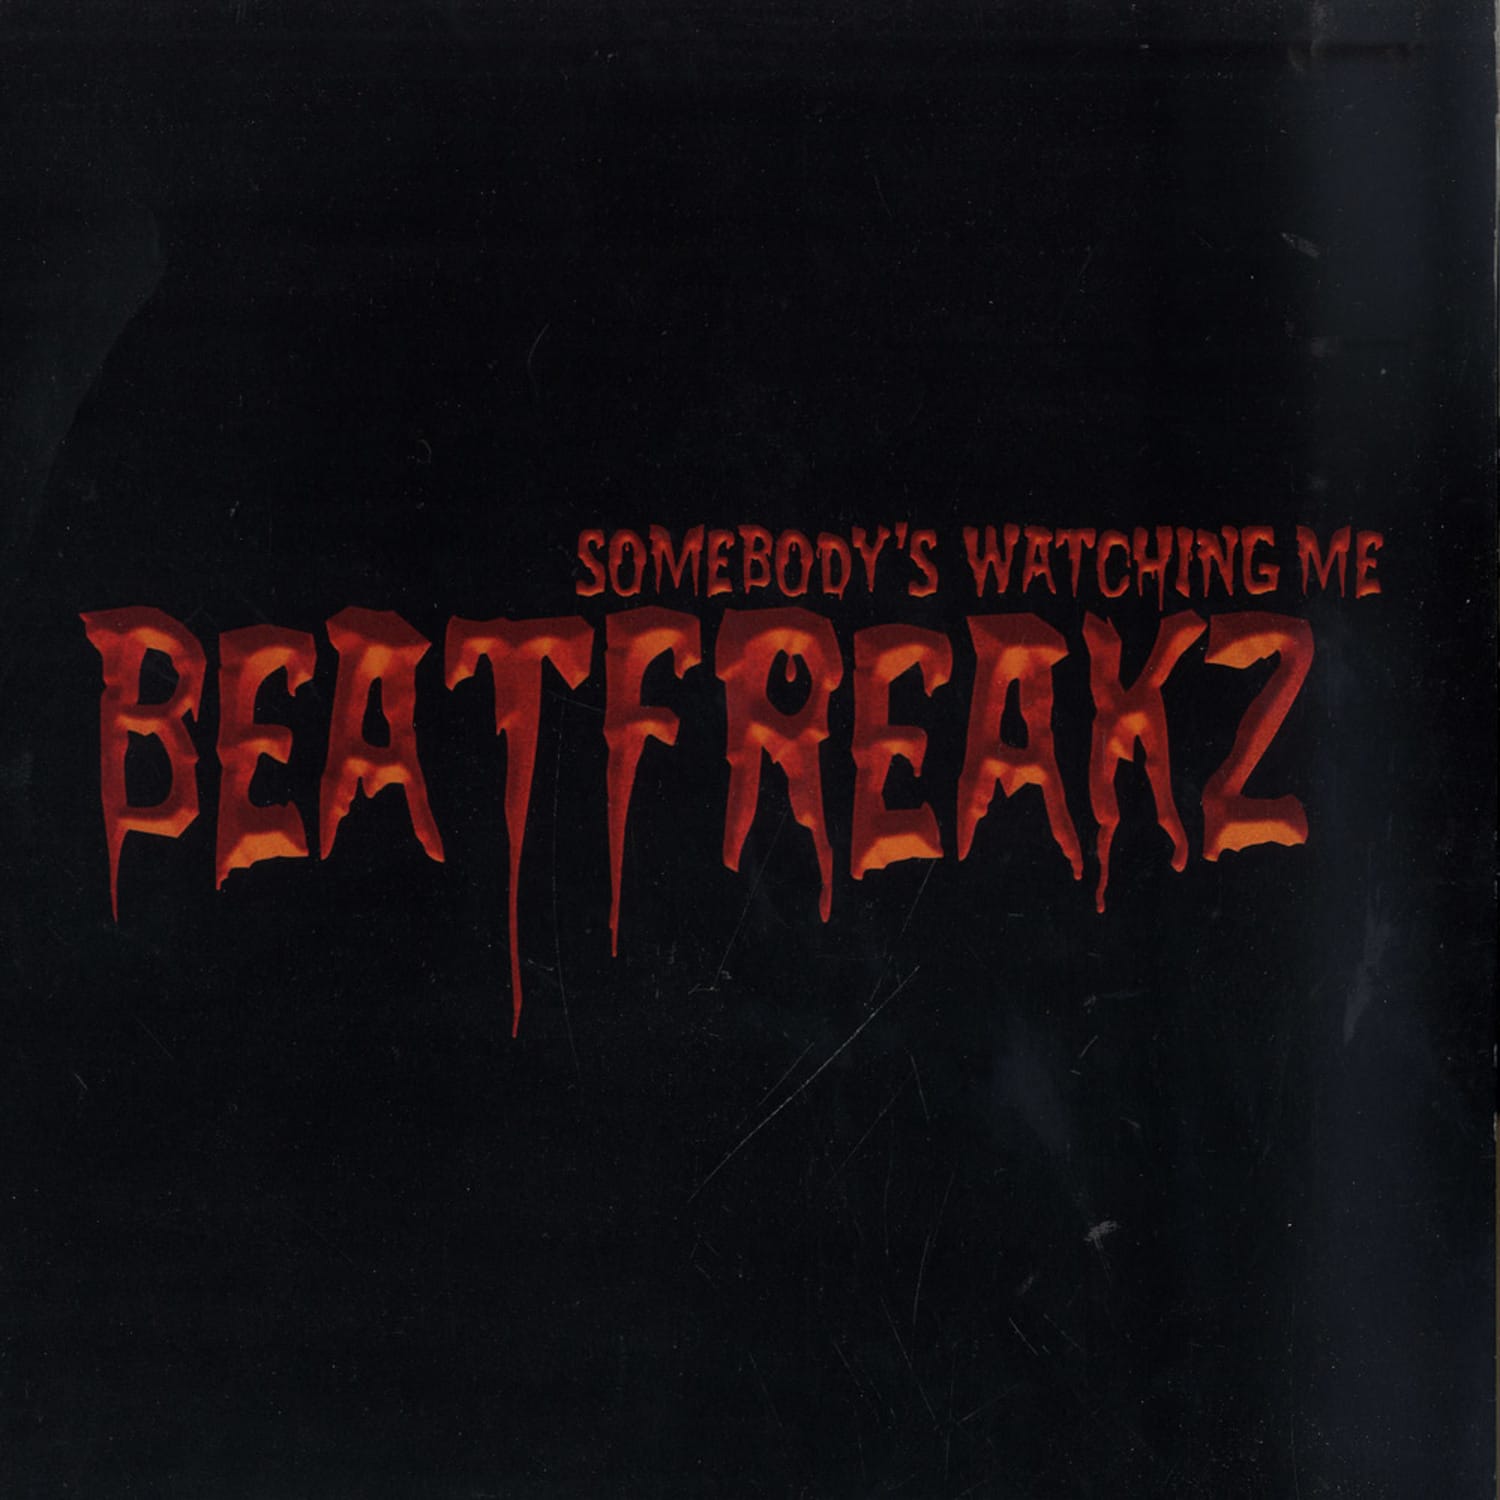 Beatfreakz - SOMEBODYS WATCHING ME